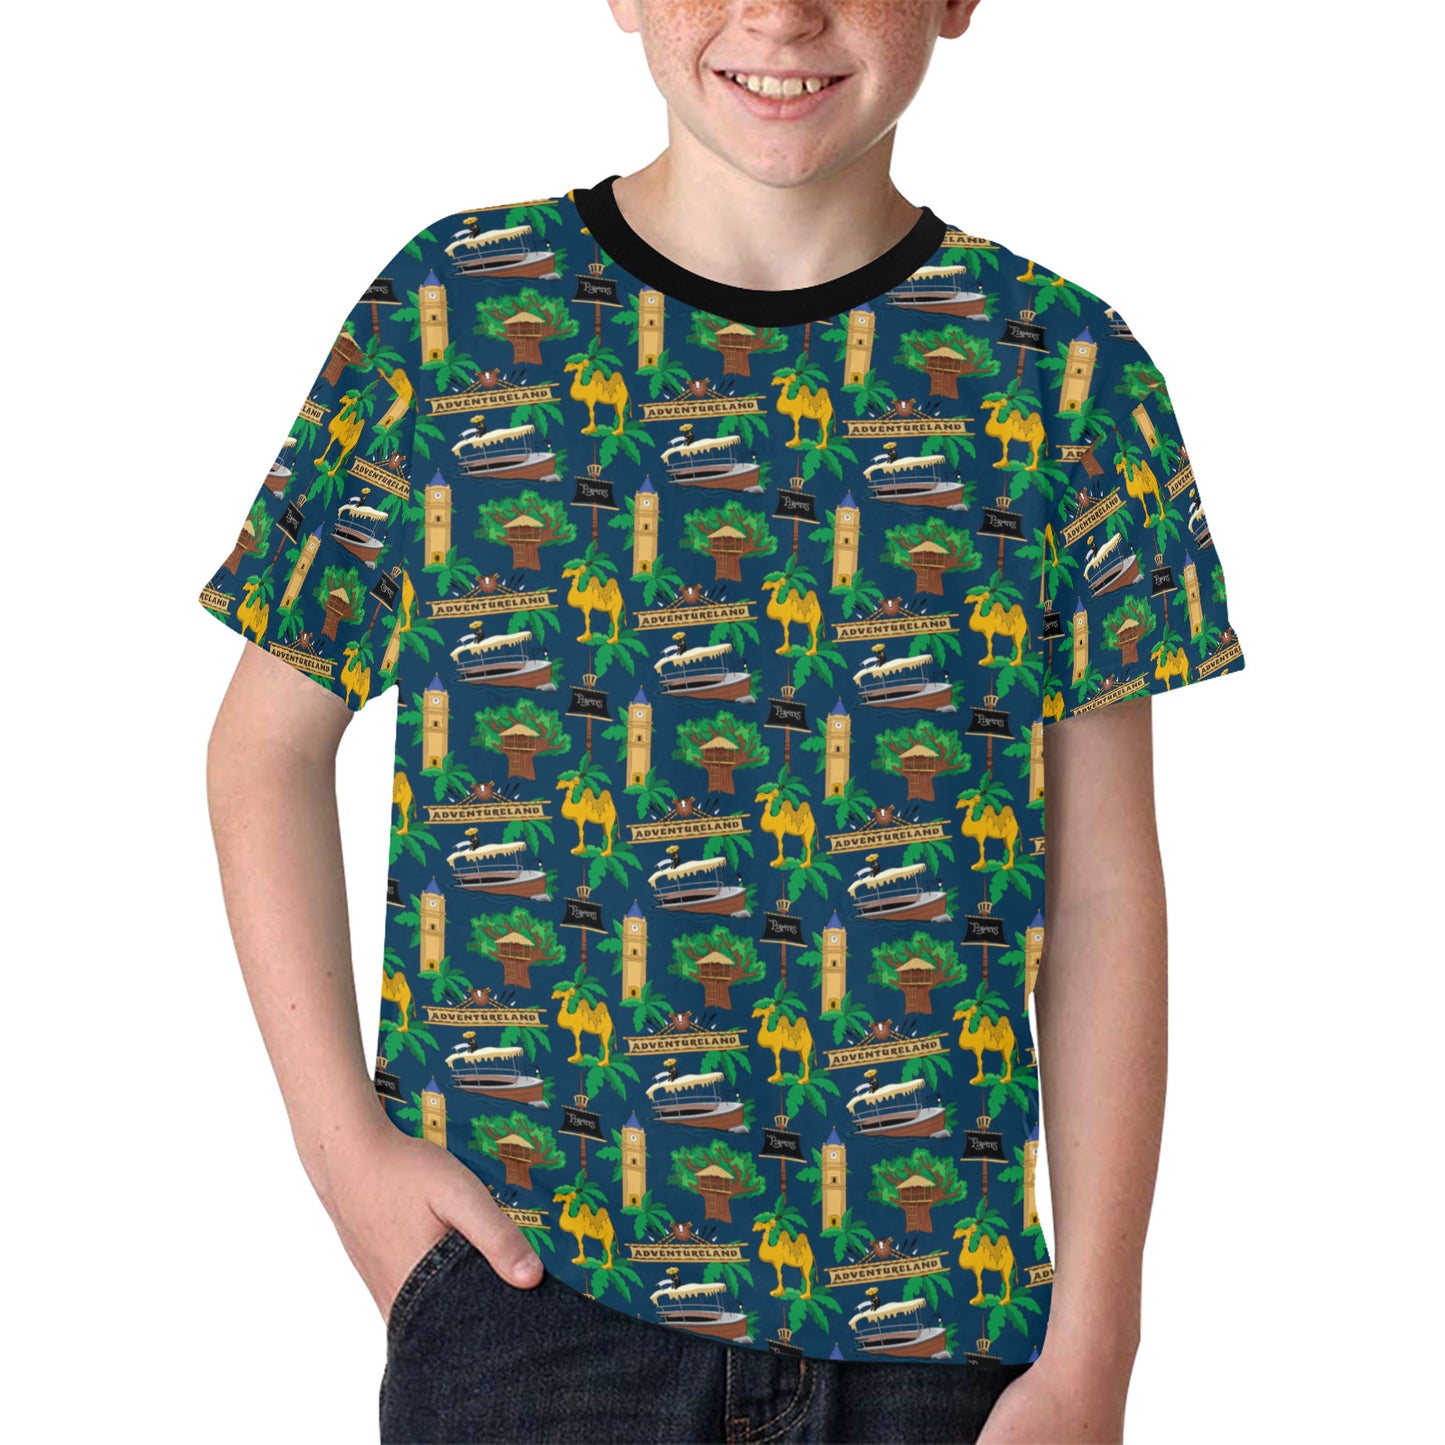 Adventureland Kids' T-shirt